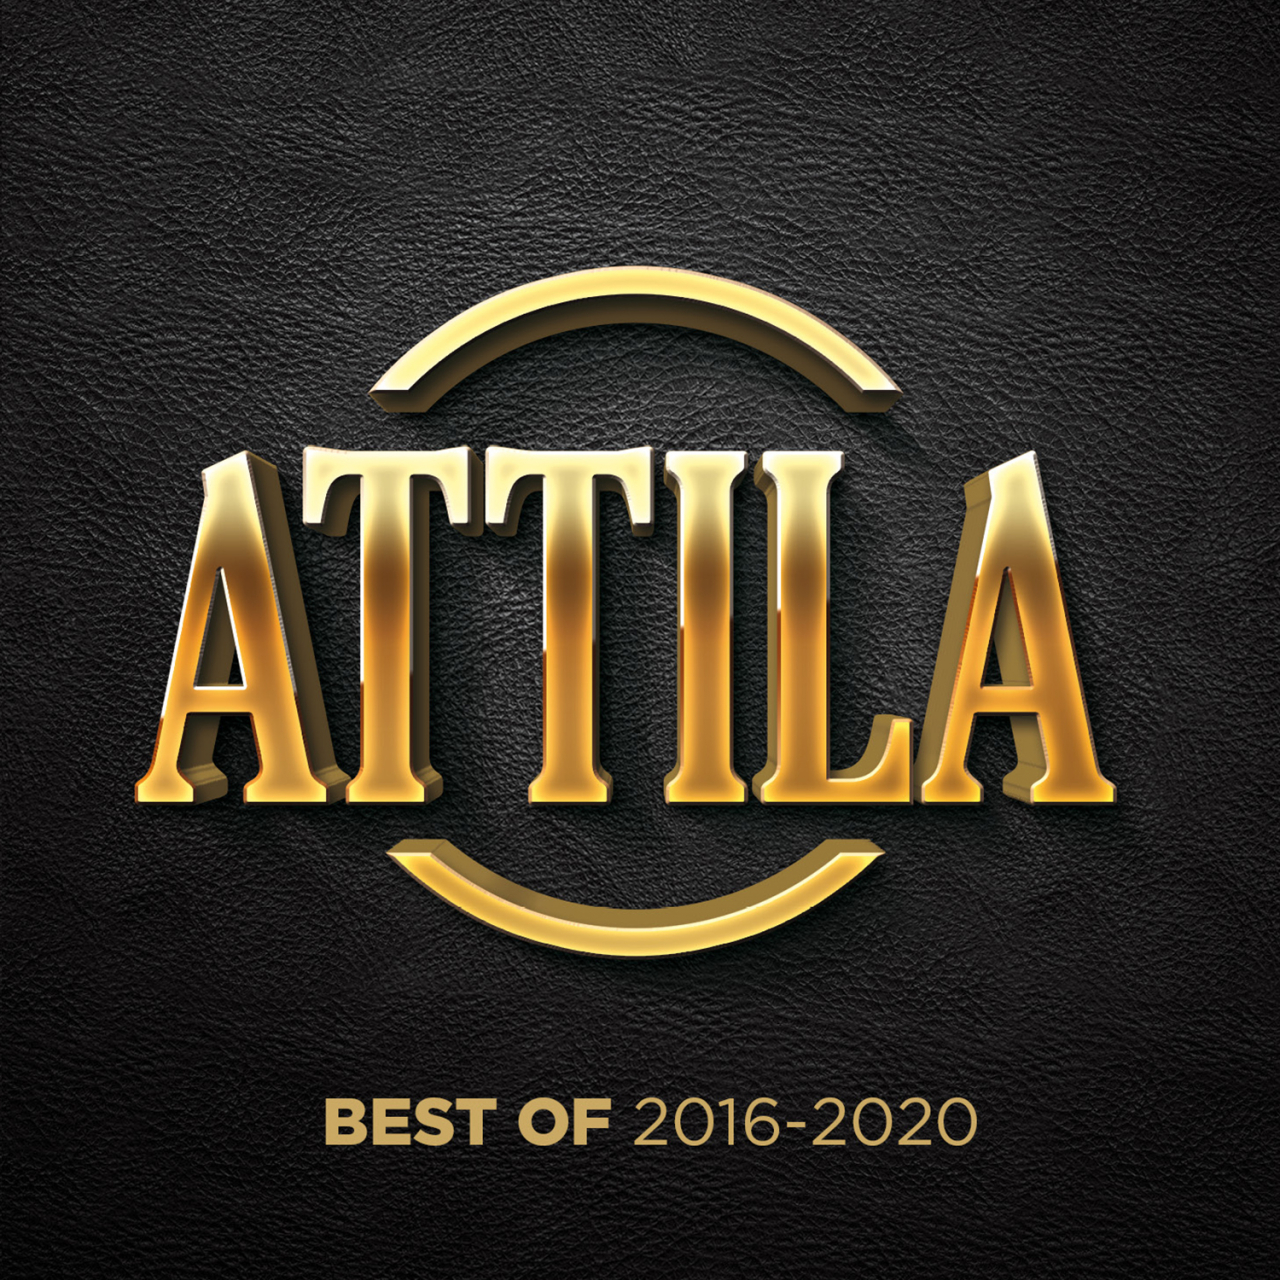 Attila Best of 2016-2020